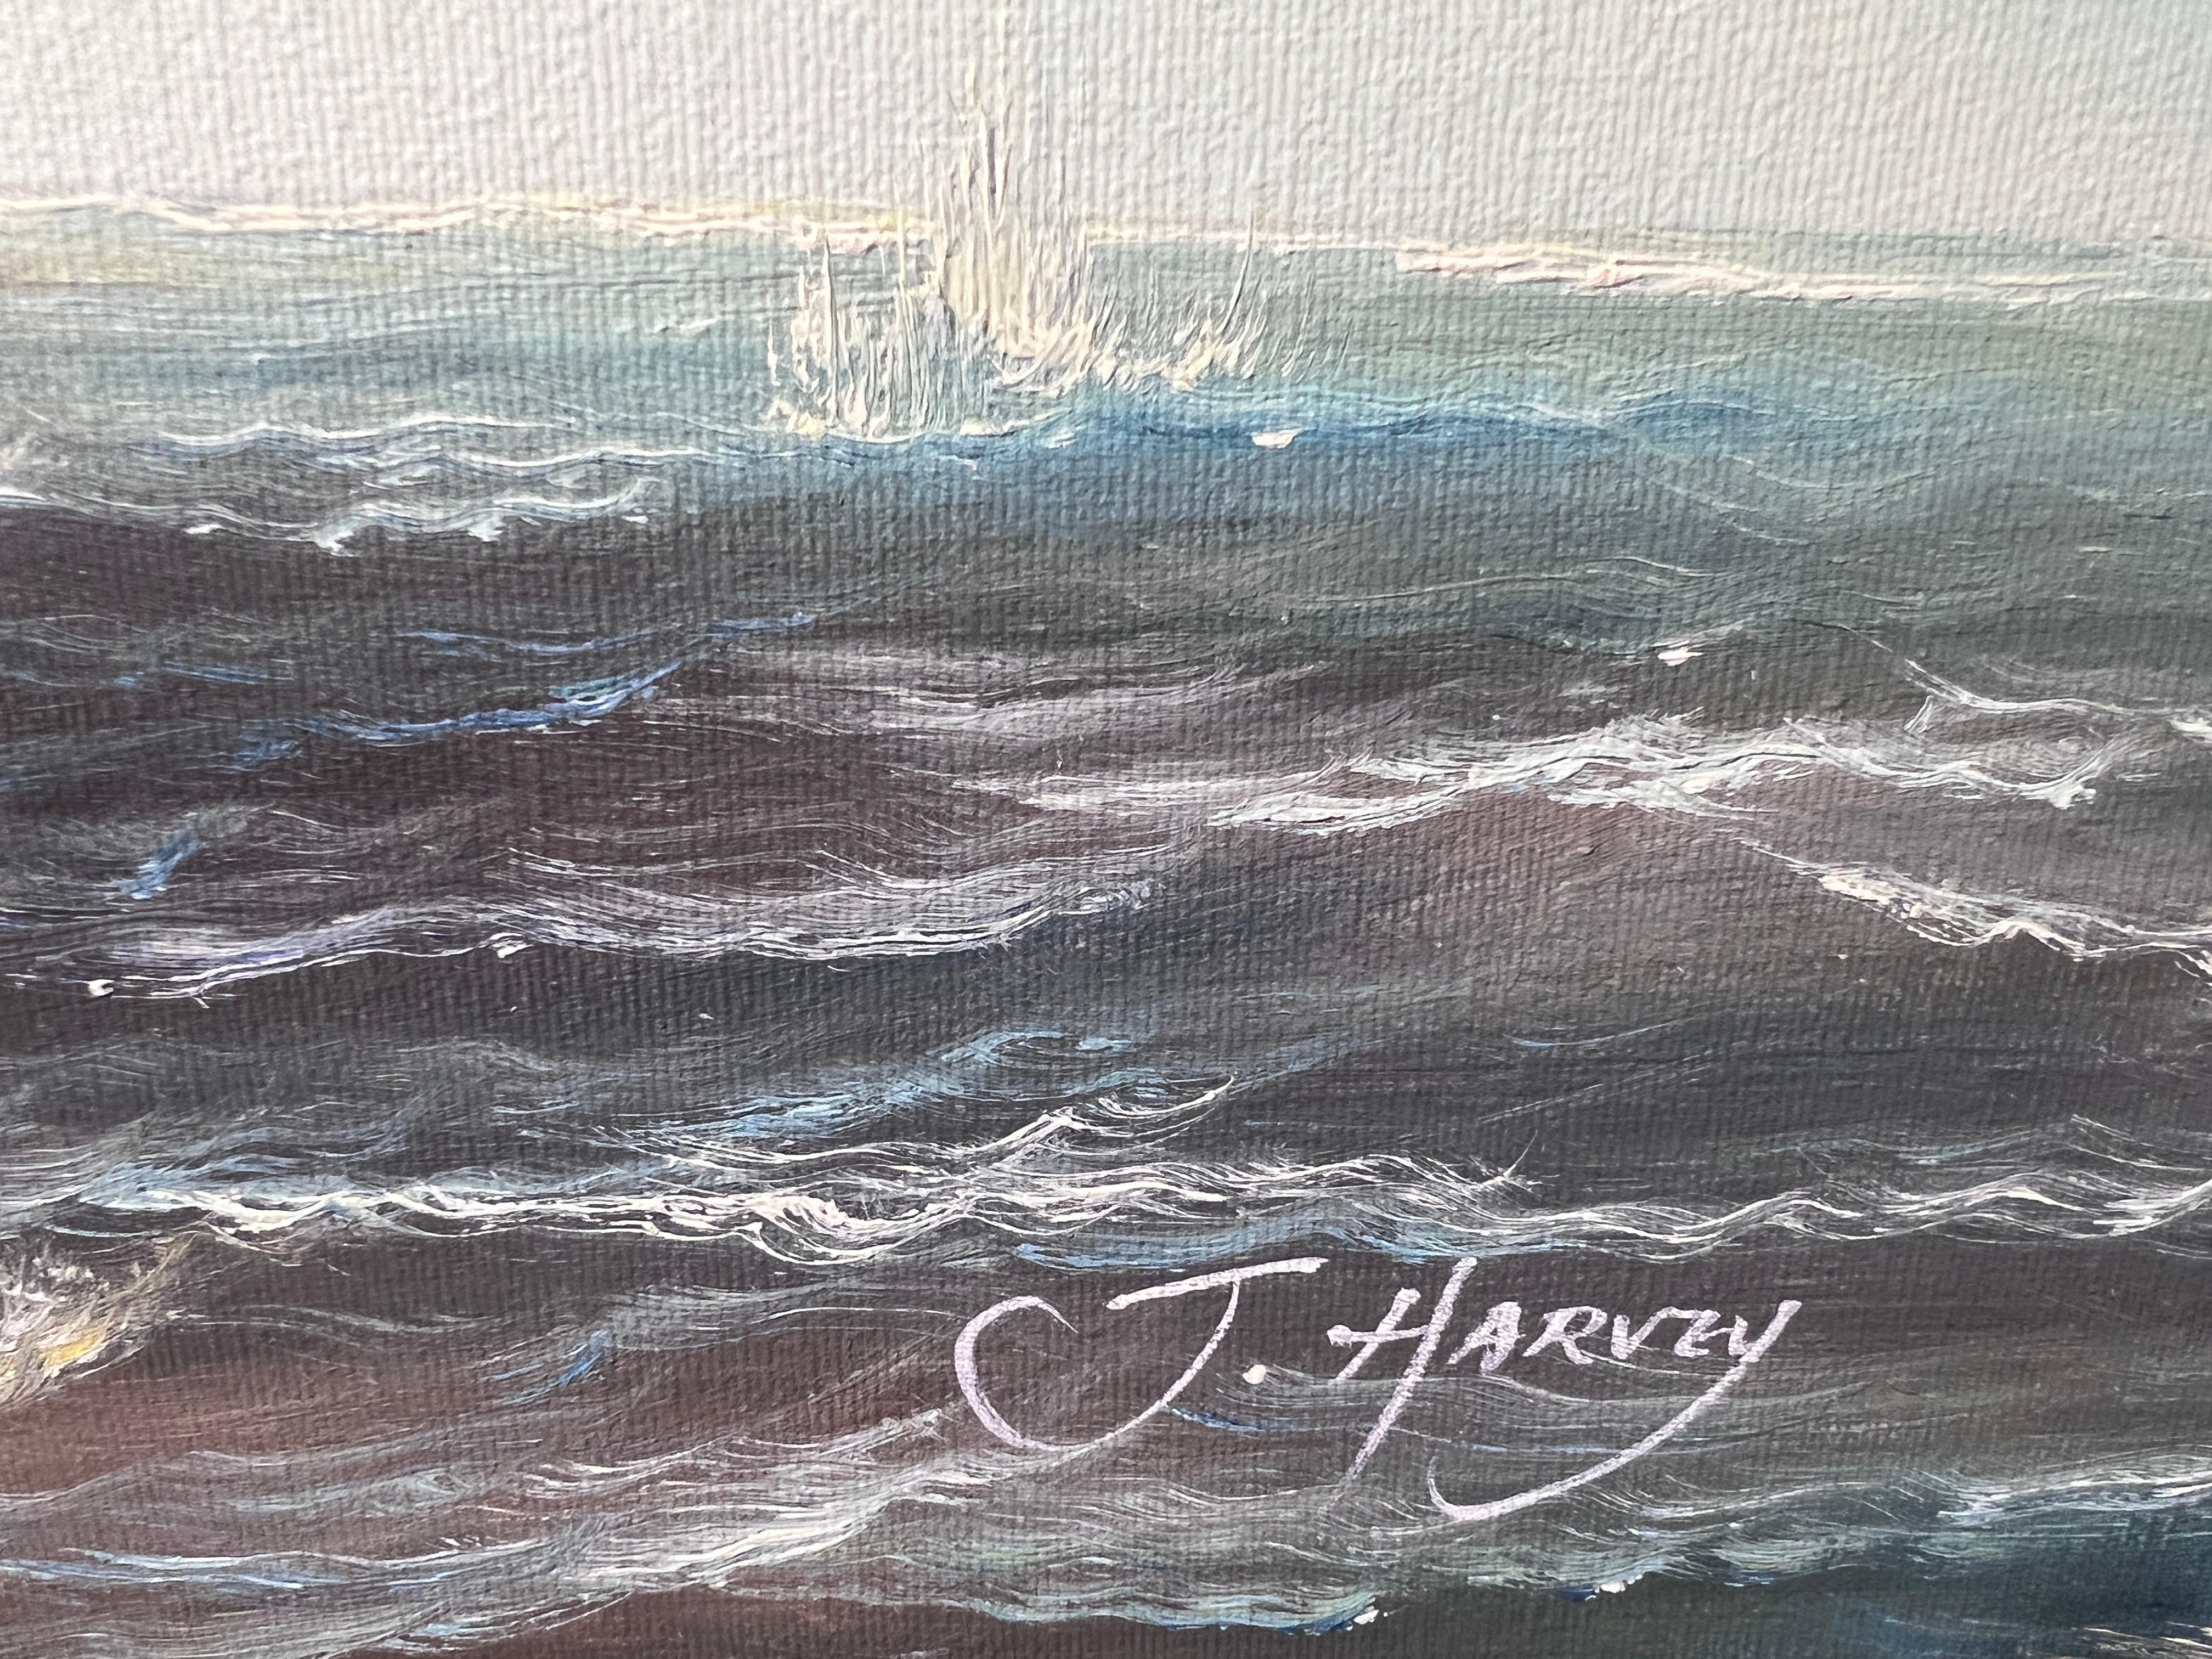 J.Harvey Large Oil painting on canvas, SHIPS BATTLE AT SEA, Signed, Framed For Sale 4